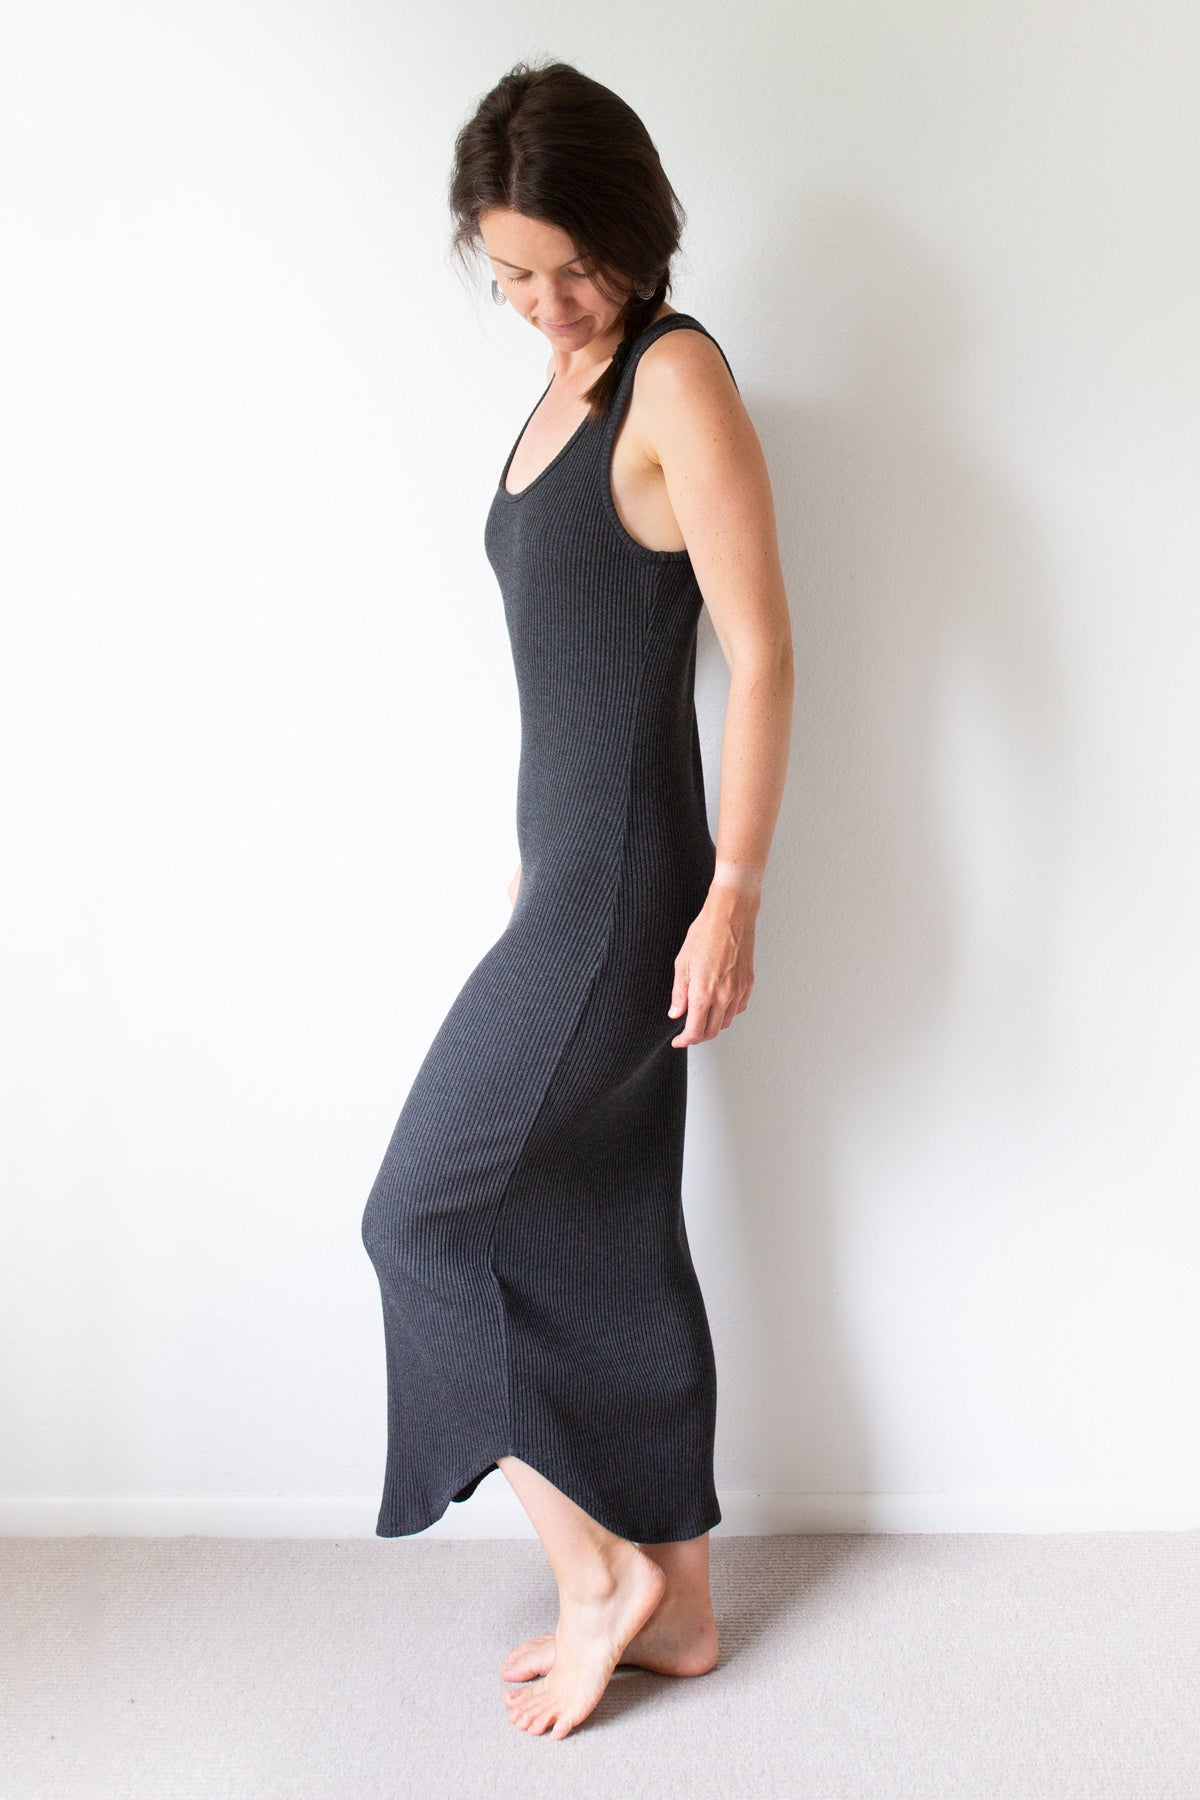 Thick Grey Rib Knit Dress | Sewing Tutorial